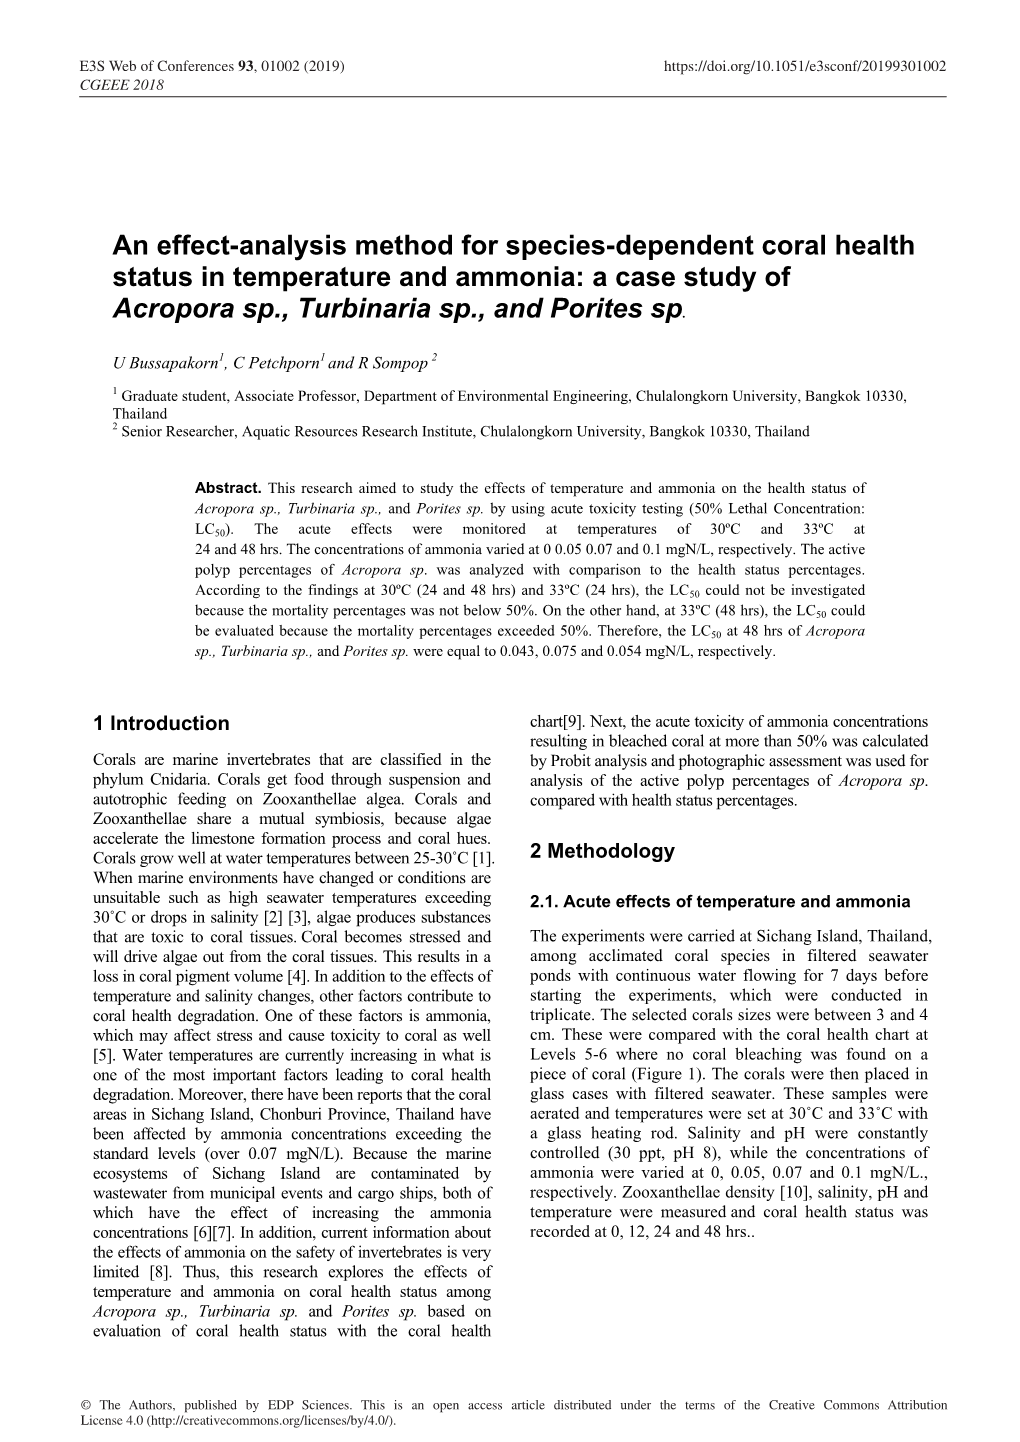 A Case Study of Acropora Sp., Turbinaria Sp., and Porites Sp